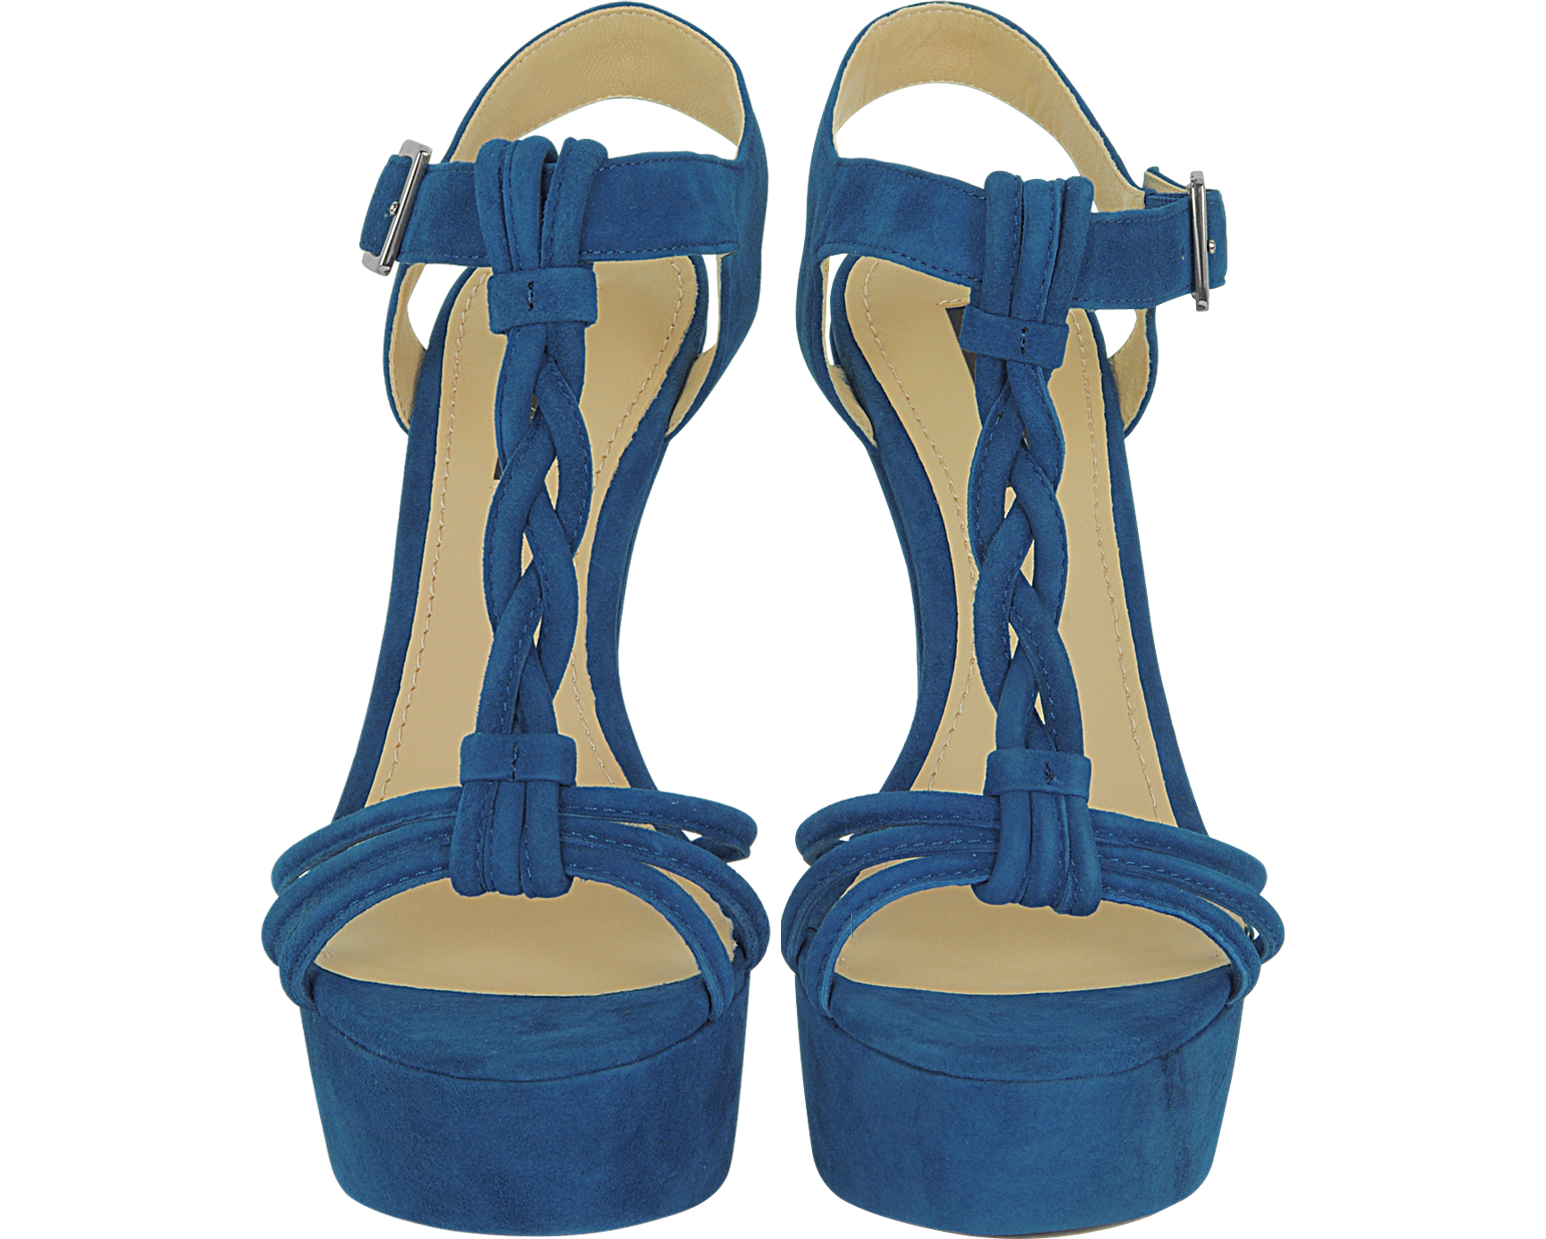 Rachel Zoe Valerie - Turquoise Suede Platform Sandal 6M US at FORZIERI